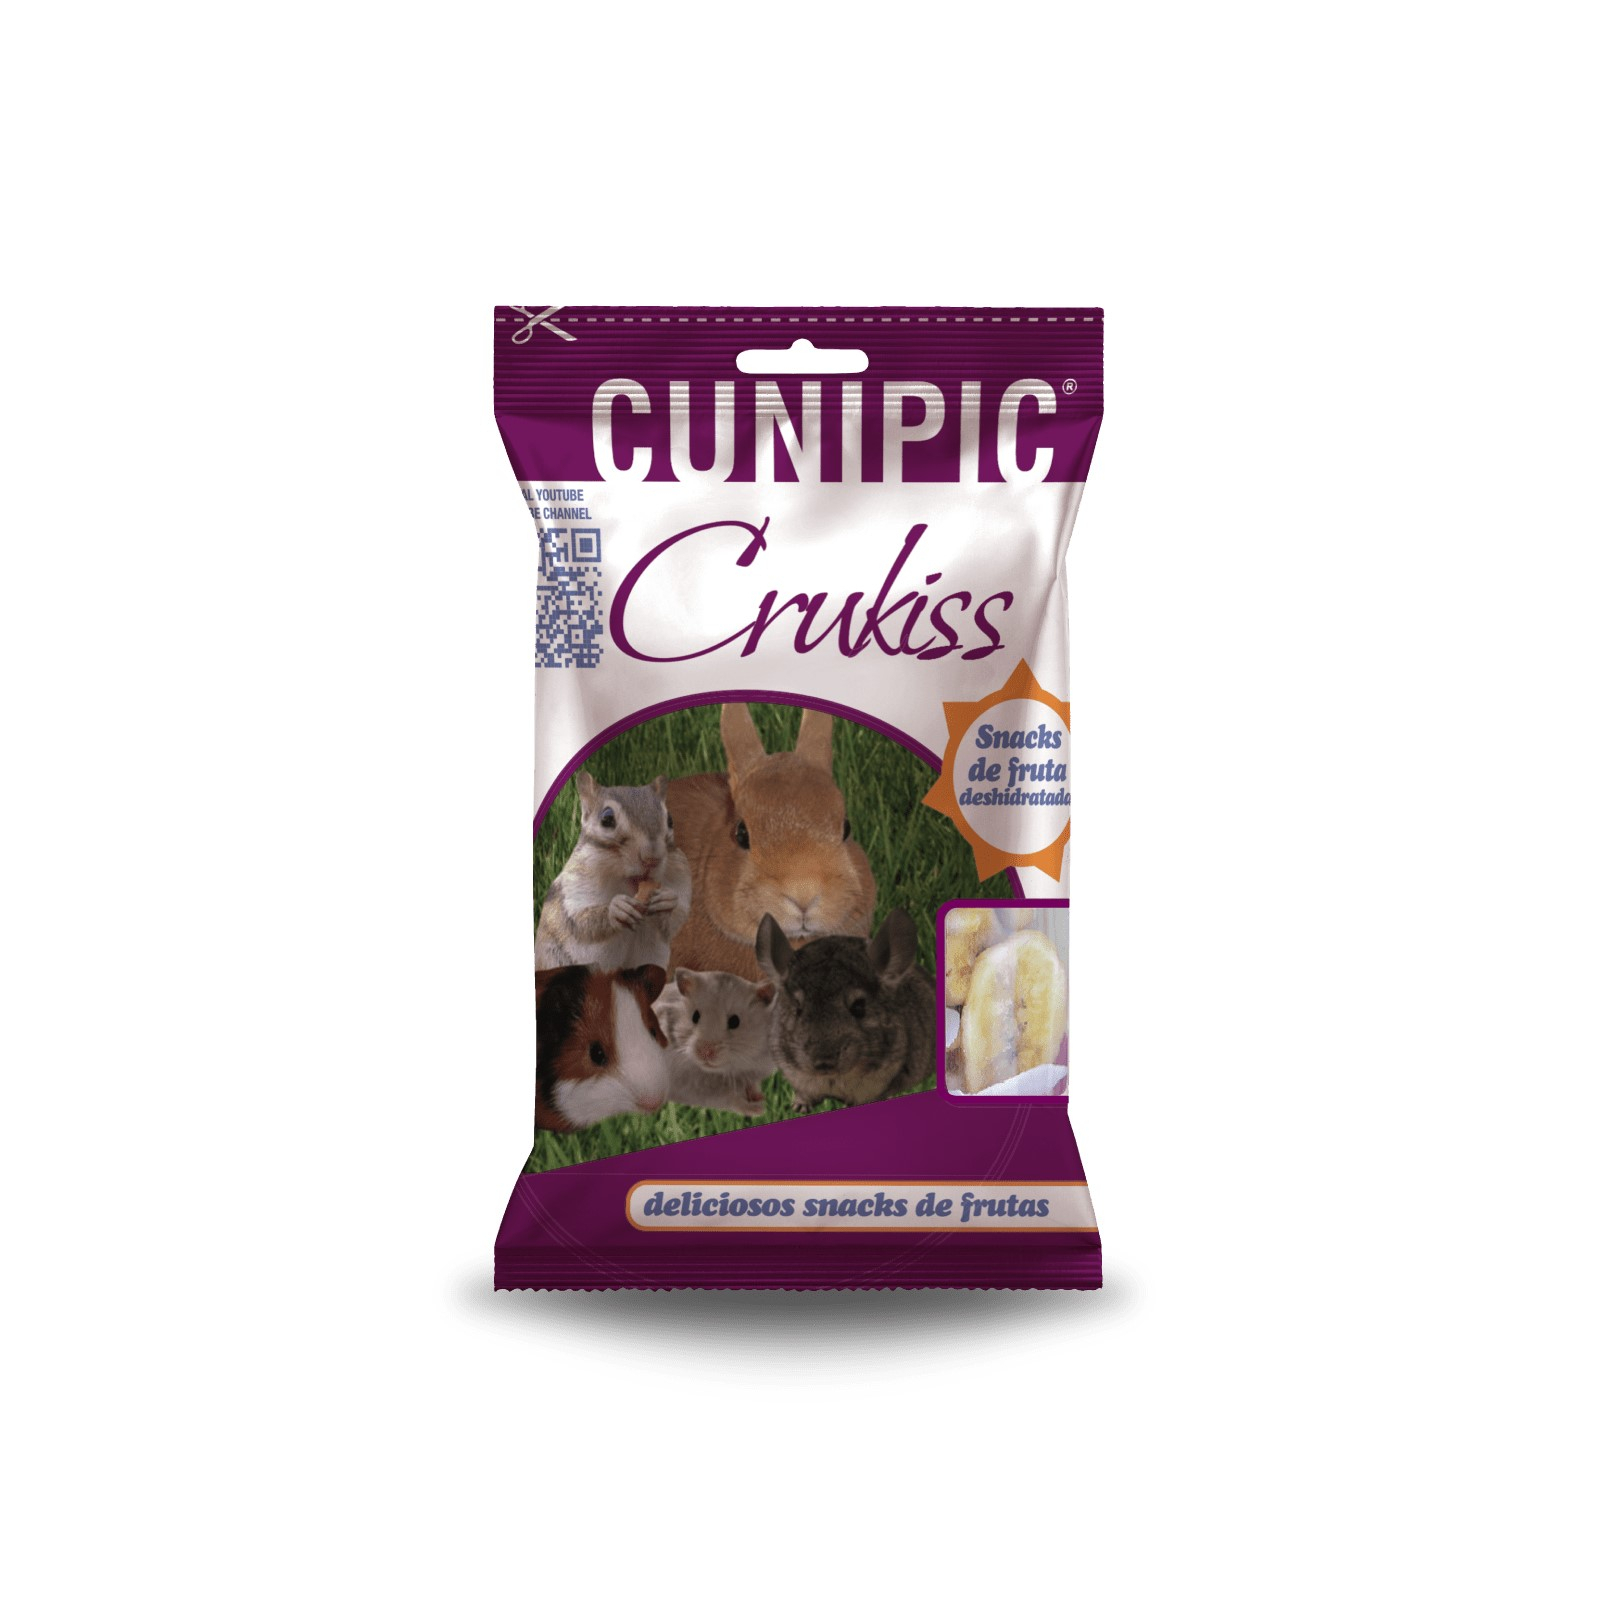 Cunipic Crukiss Nahrungsergänzungsmittel Trockenobst-Snacks für Nager